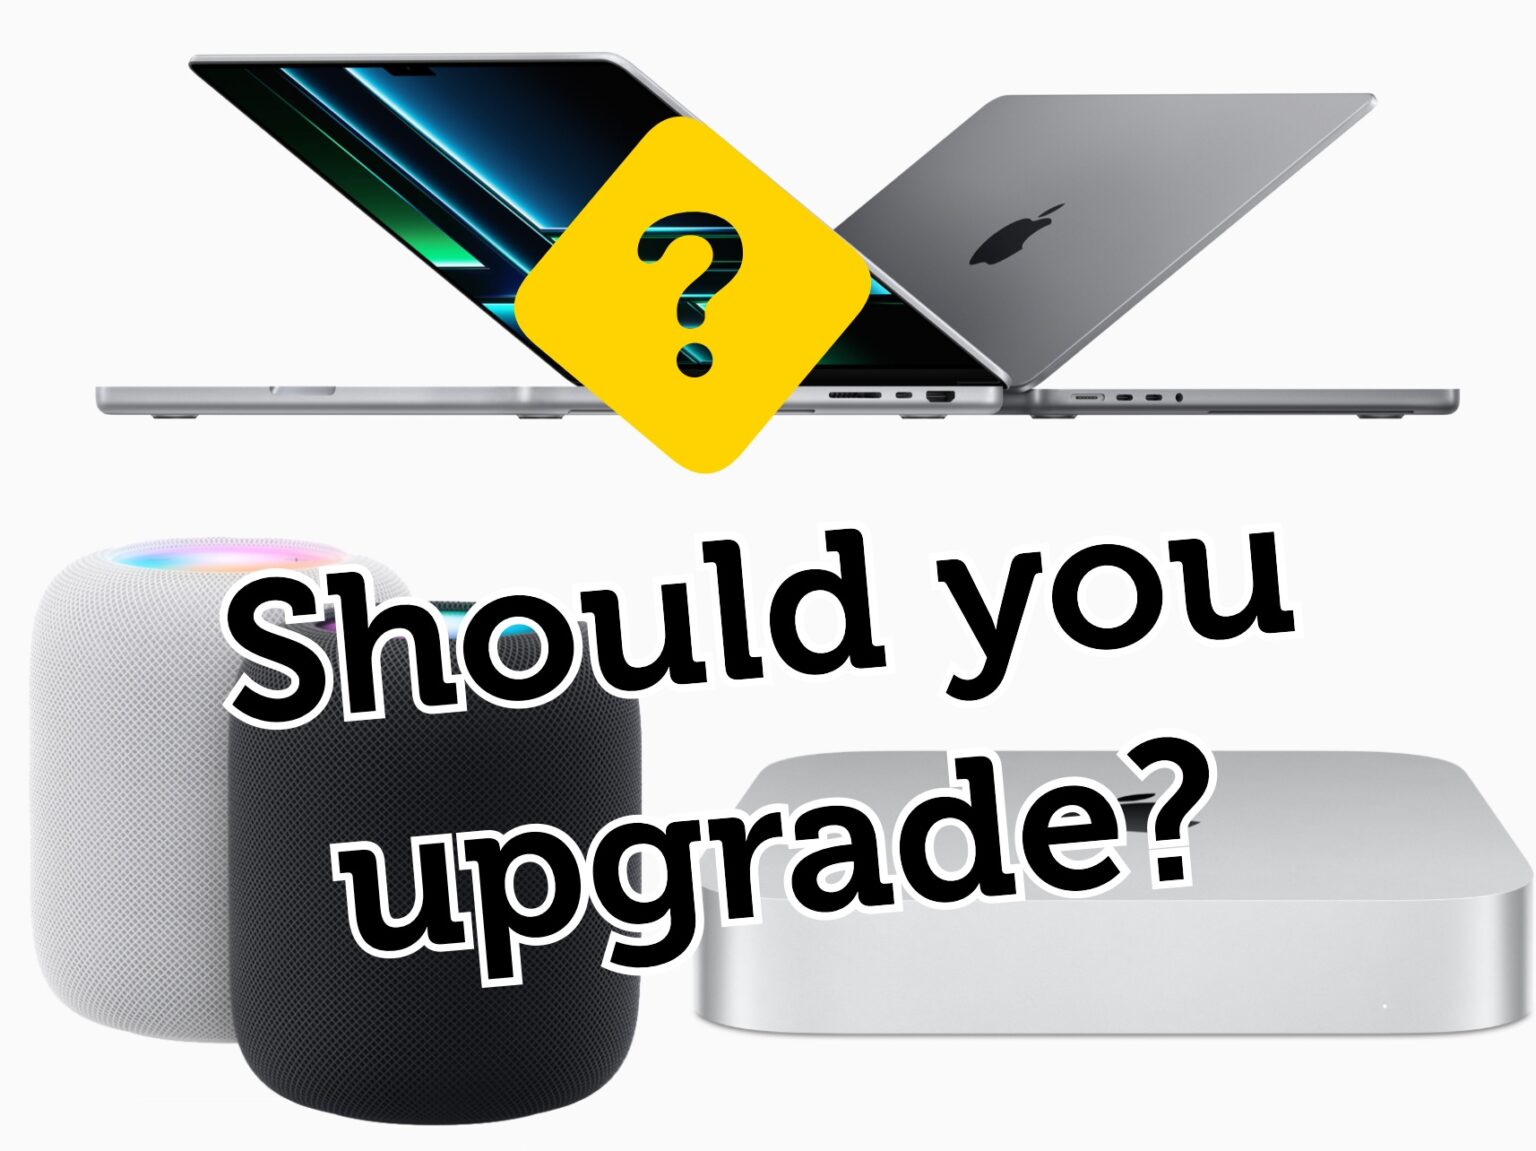 Should you upgrade?